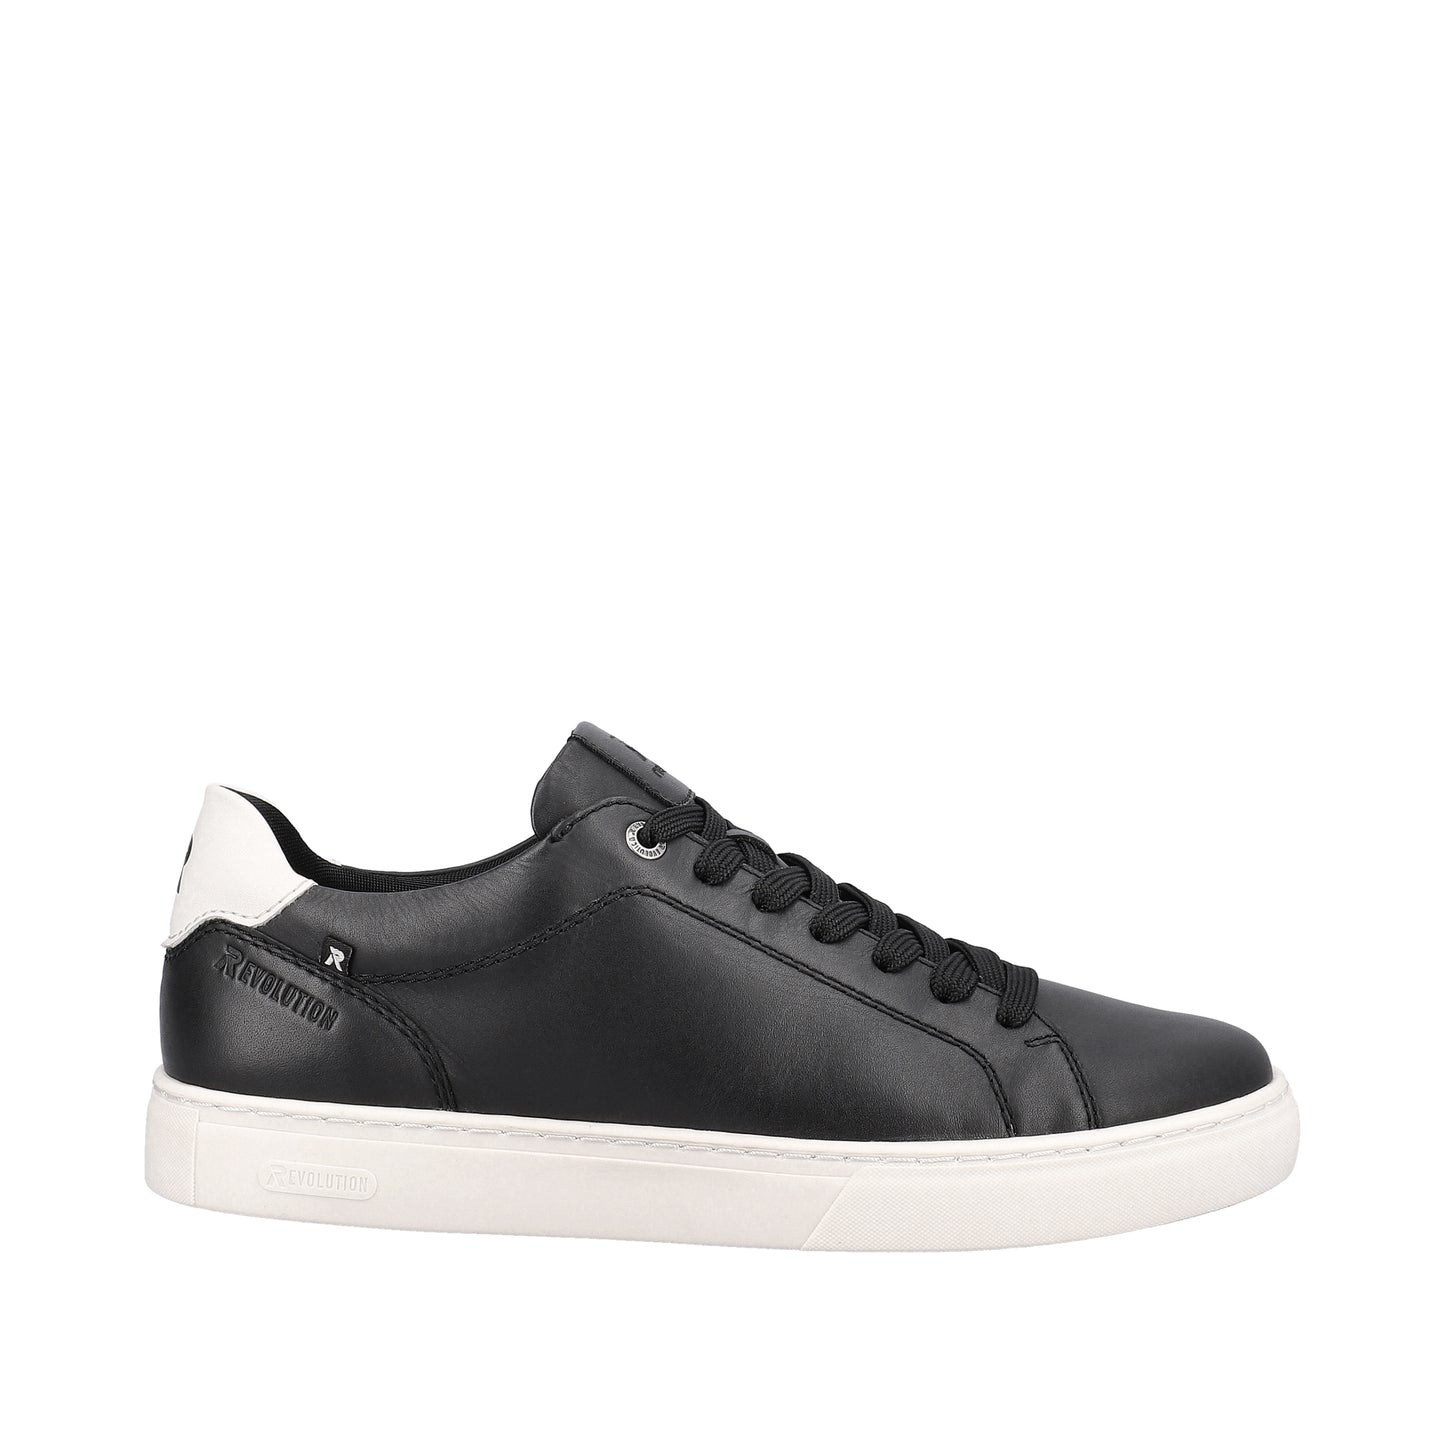 U0700-01 Black Lace Up Sneaker